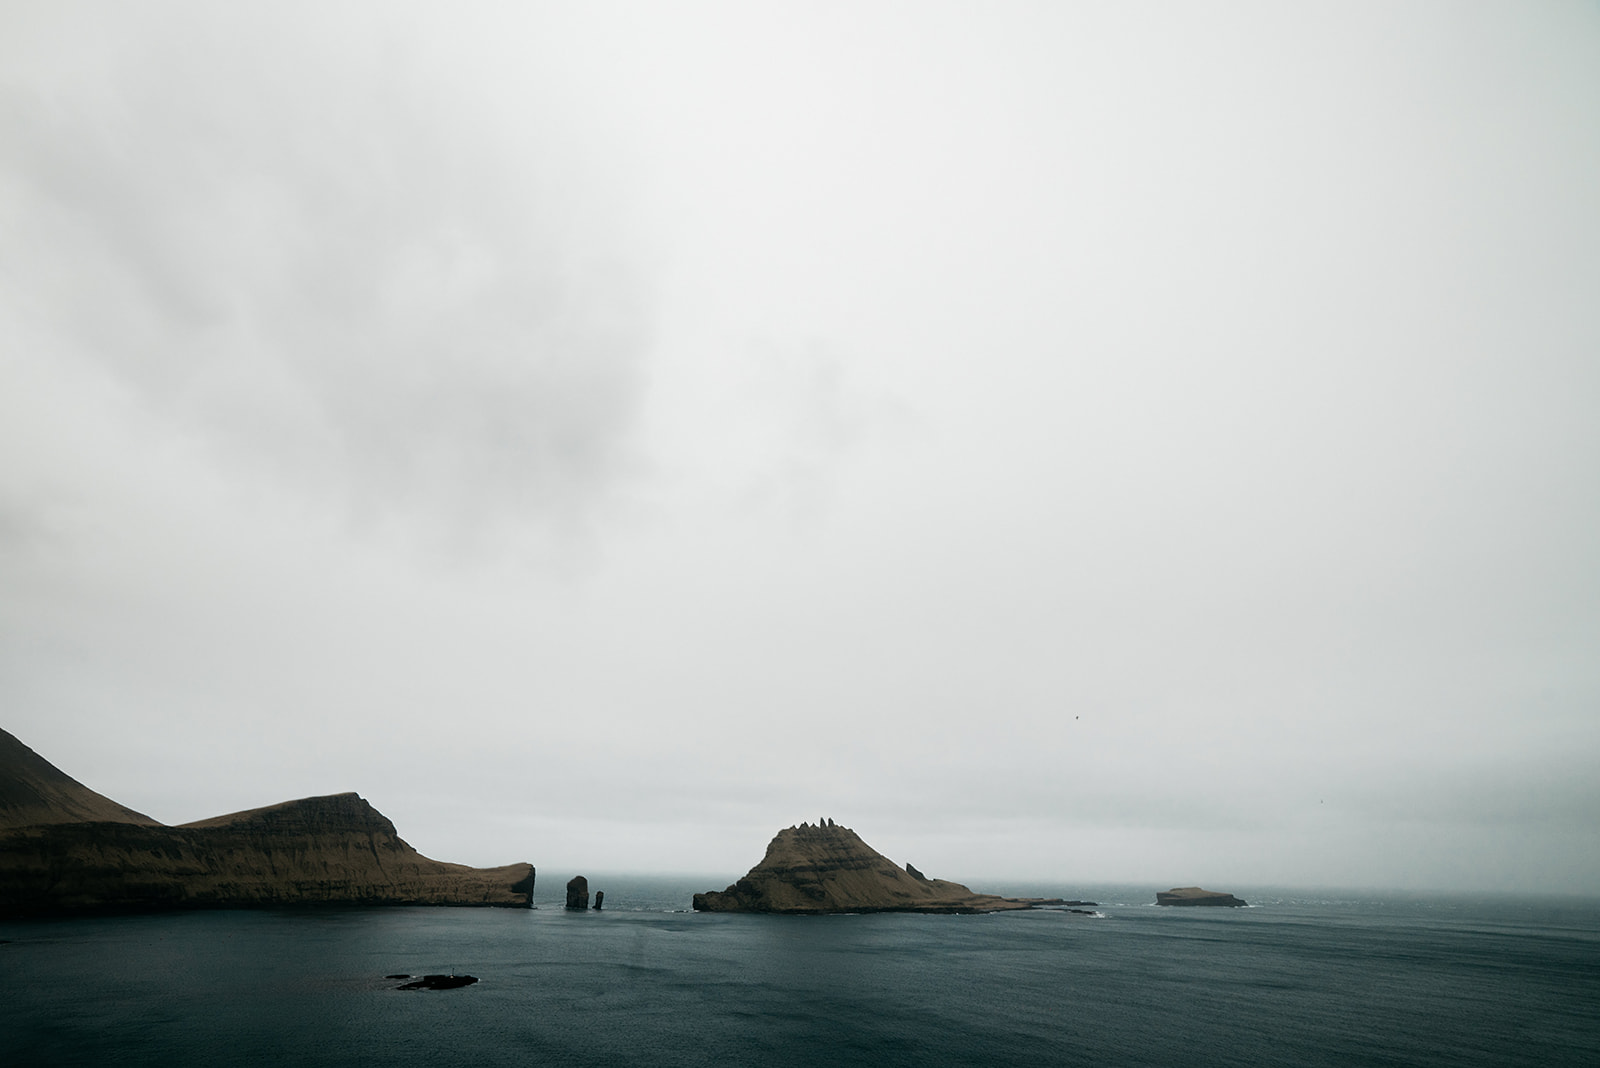 Small islands peaking through dark ocean on cloudy day